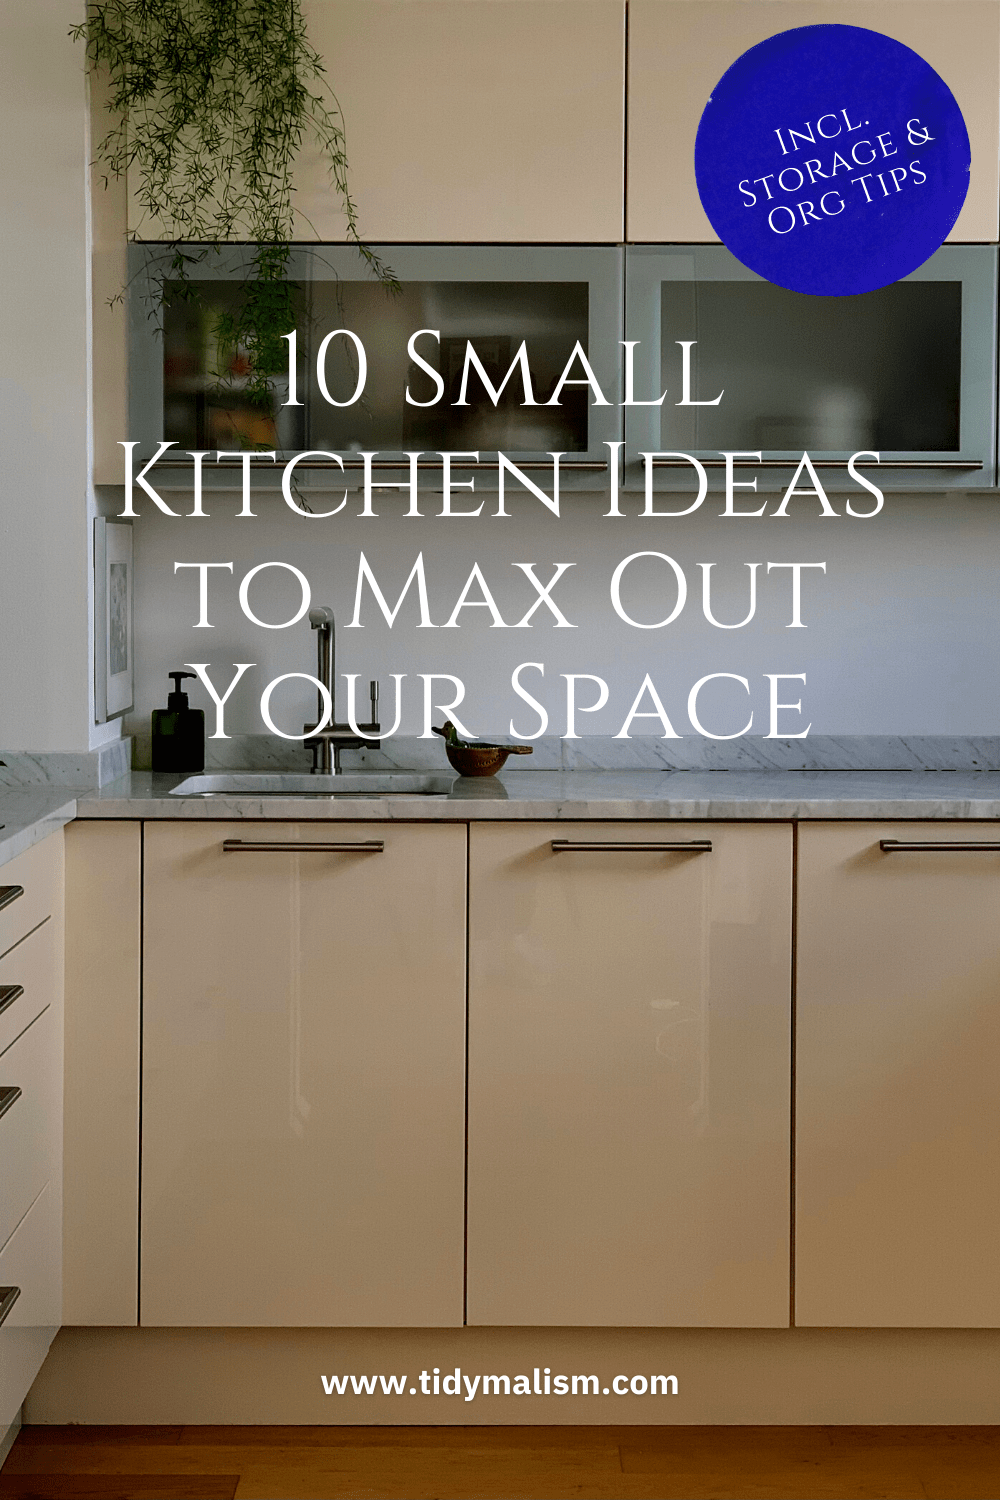 https://tidymalism.com/wp-content/uploads/2021/08/10_small_kitchen_ideas.png